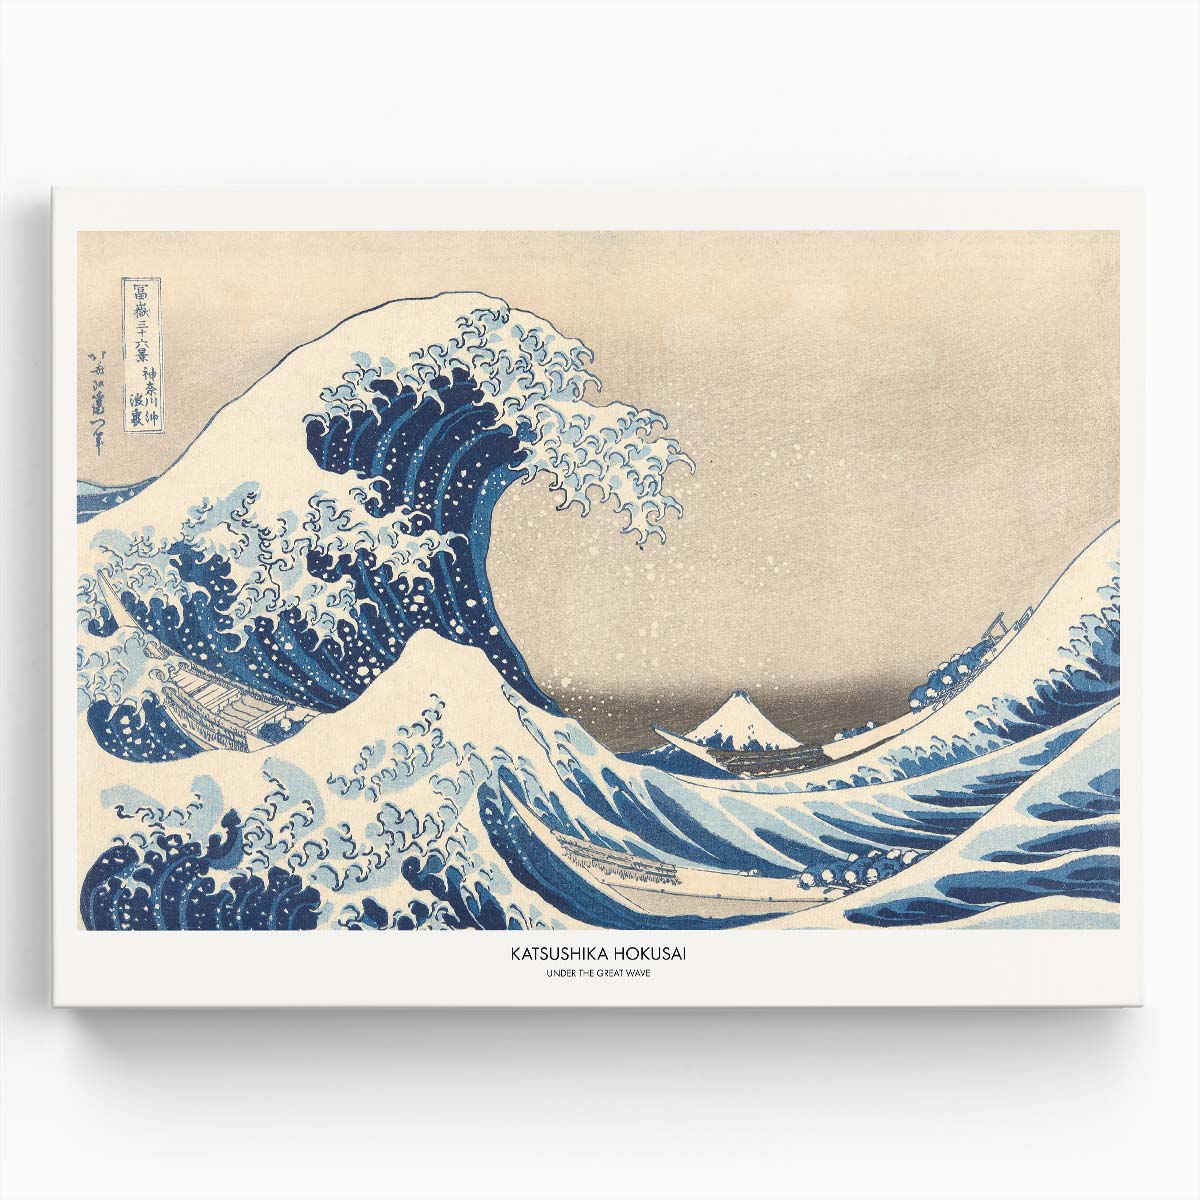 Katsushika Hokusai's Great Wave Japanese Ukiyo-e Masterpiece Wall Art by Luxuriance Designs. Made in USA.